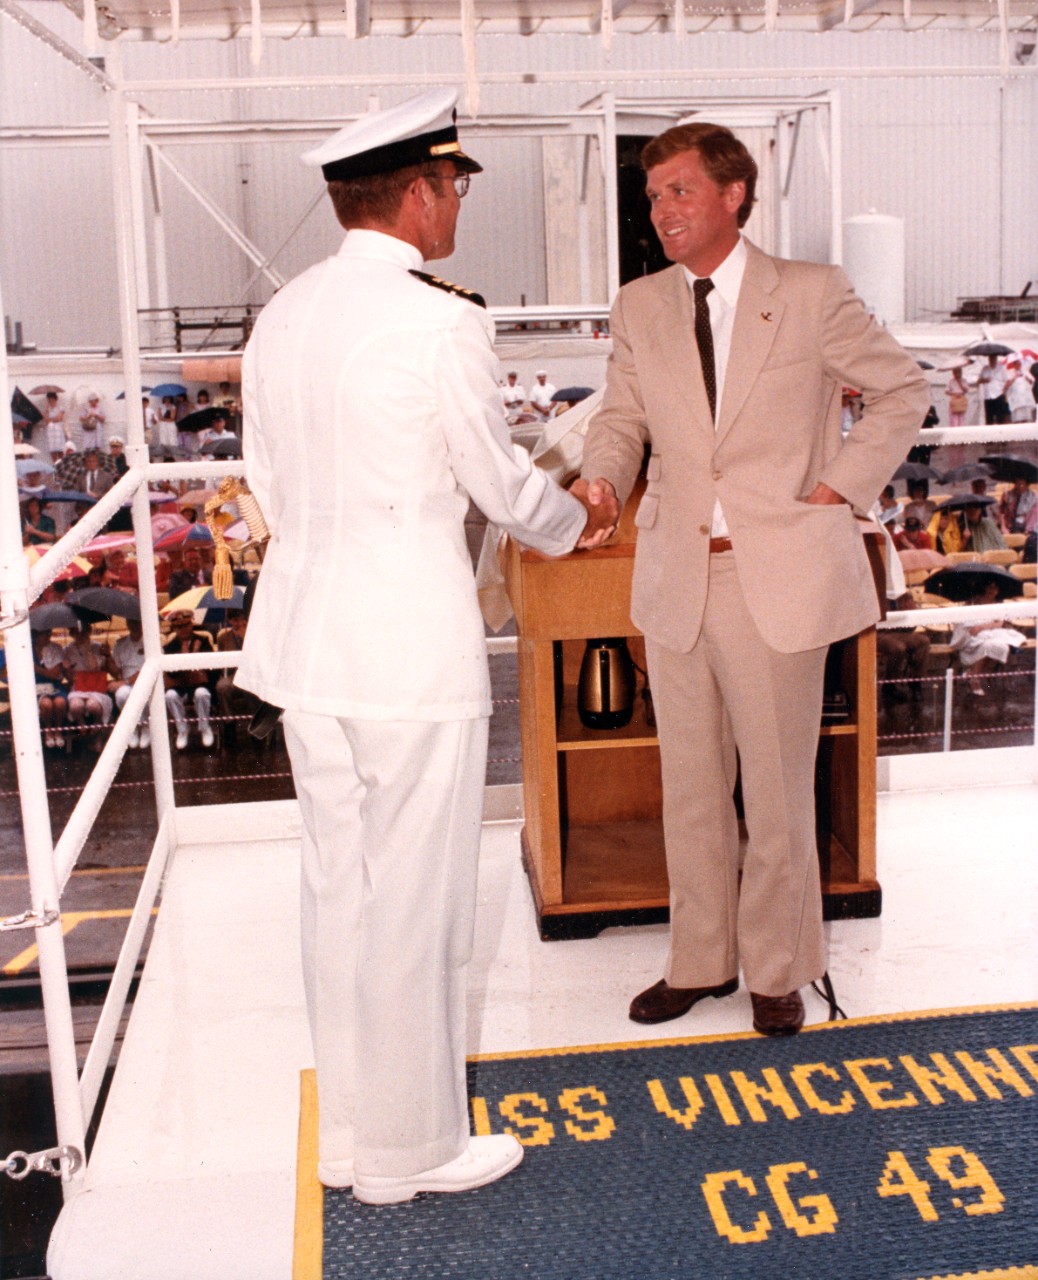 UA 480.11 USS Vincennes (CG 49) Collection